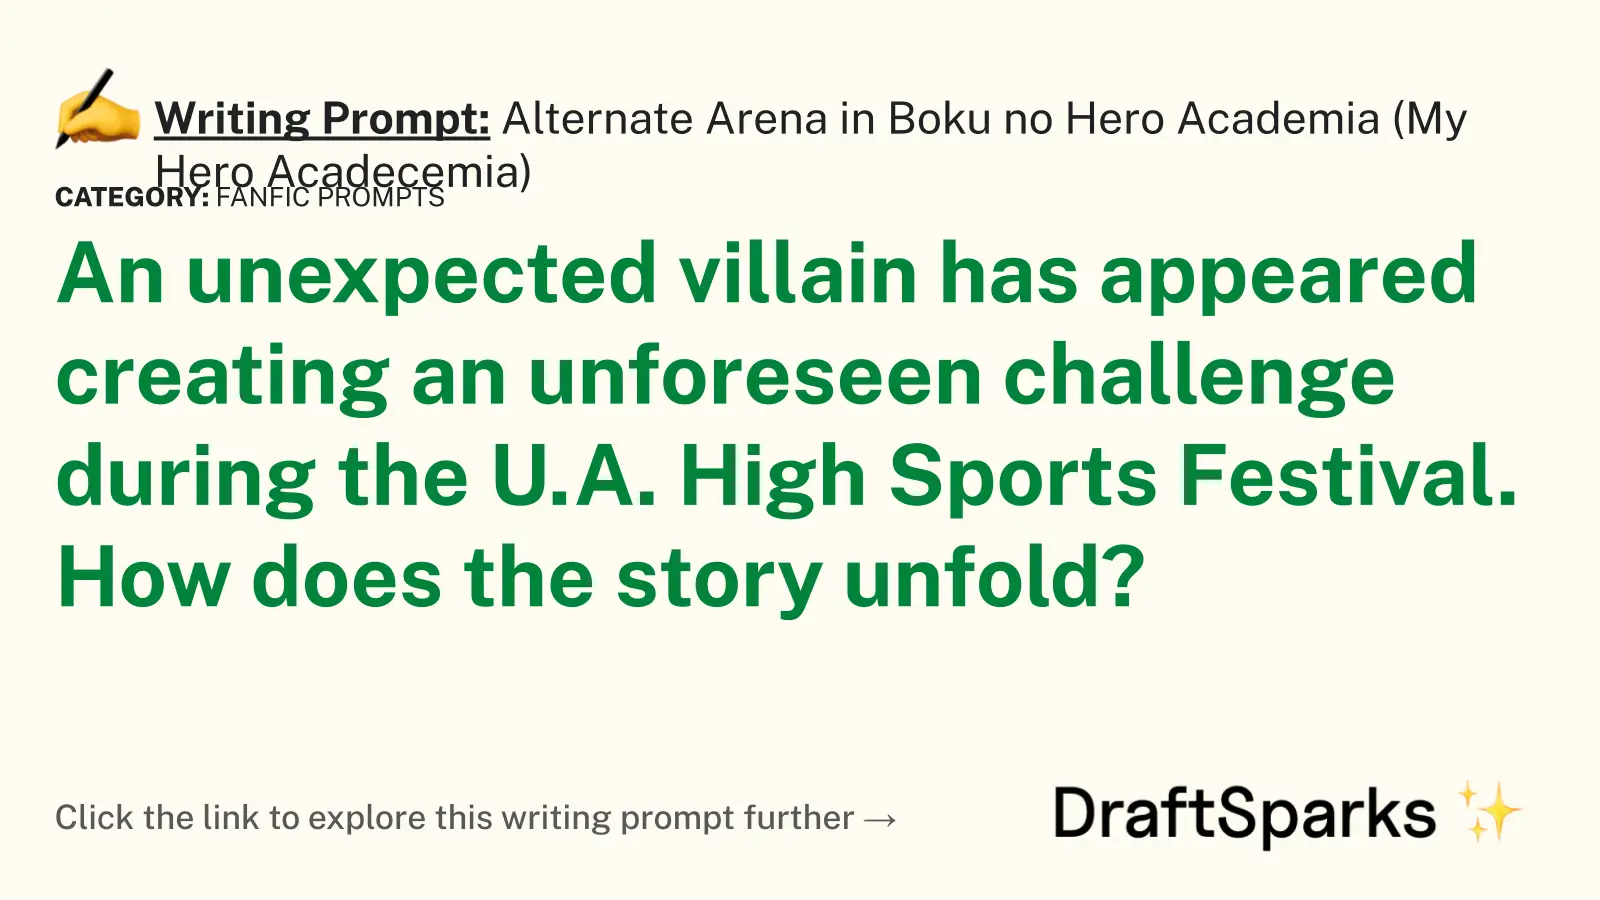 Alternate Arena in Boku no Hero Academia (My Hero Acadecemia)